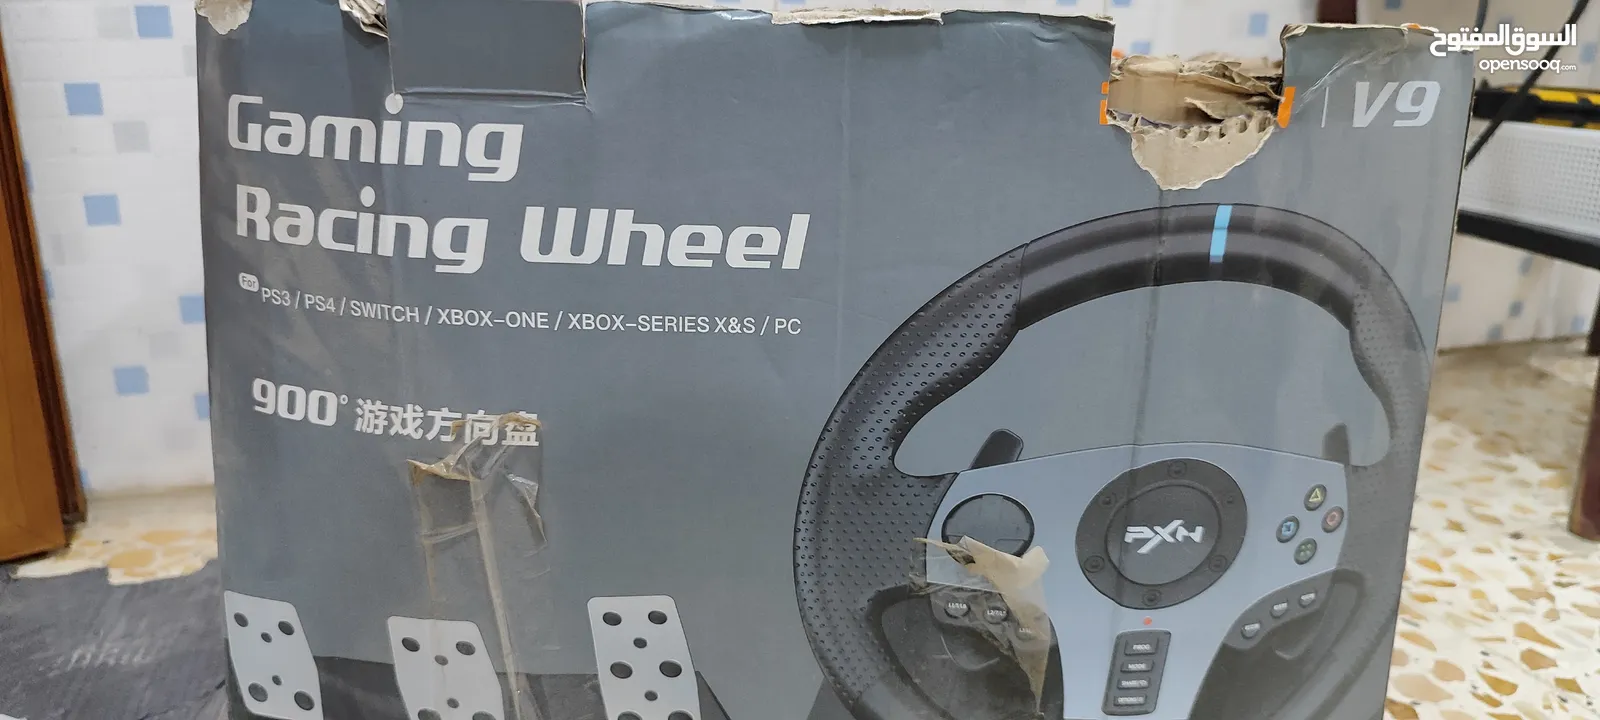 دركسون لفه ونص قير عادي 6 نمرات اسمه Gaming racing wheel ب 140 وبيه مجال